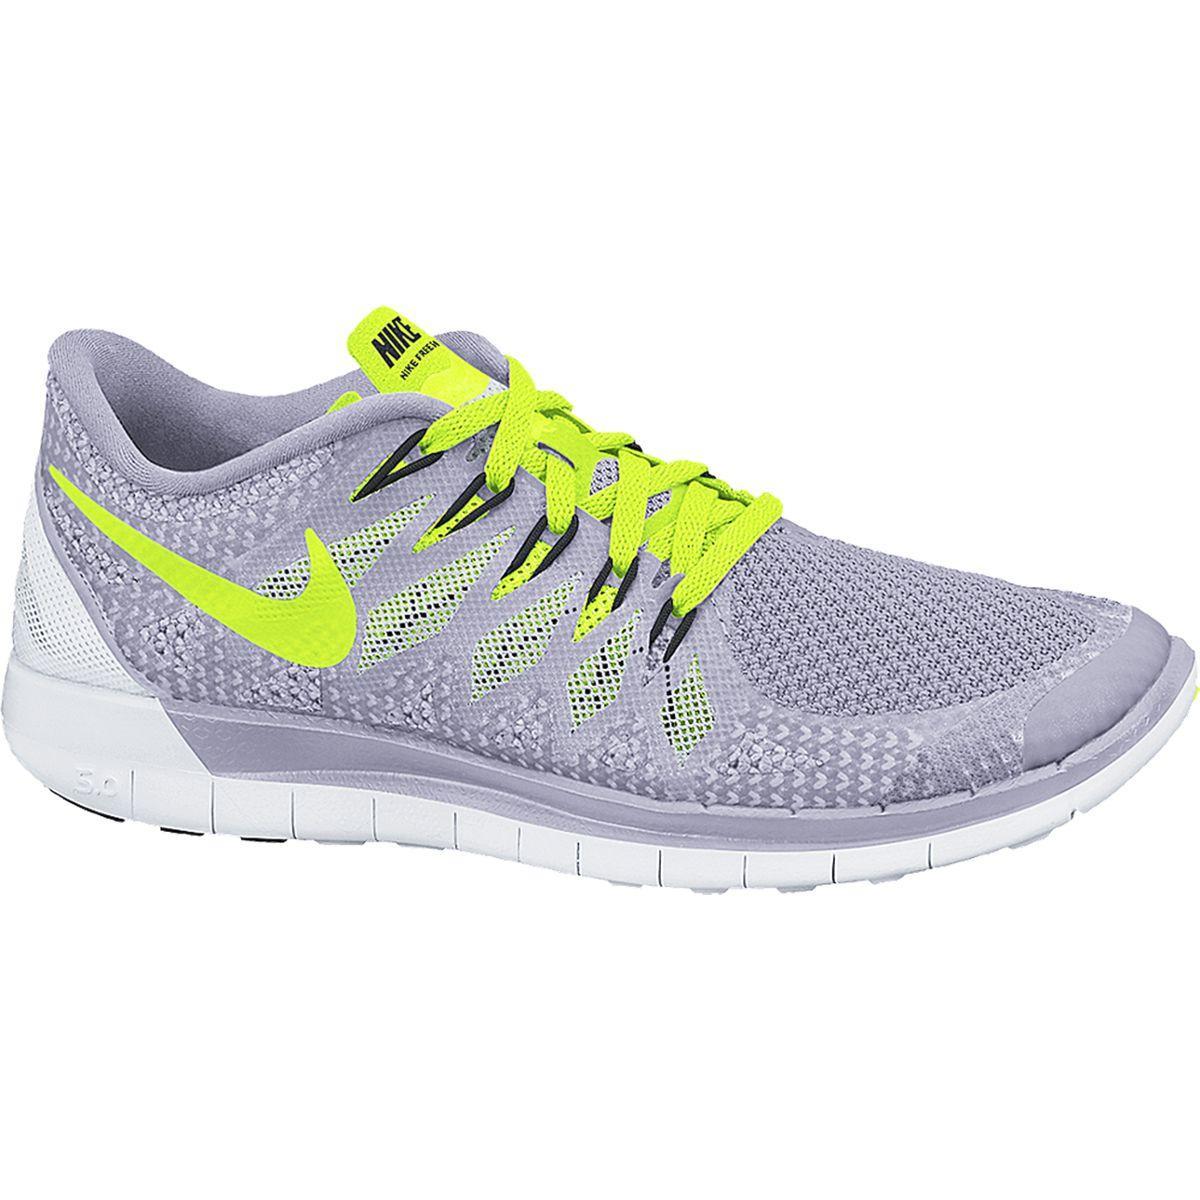 Nike Womens Free 5.0+ Running Shoes Titanium/Volt